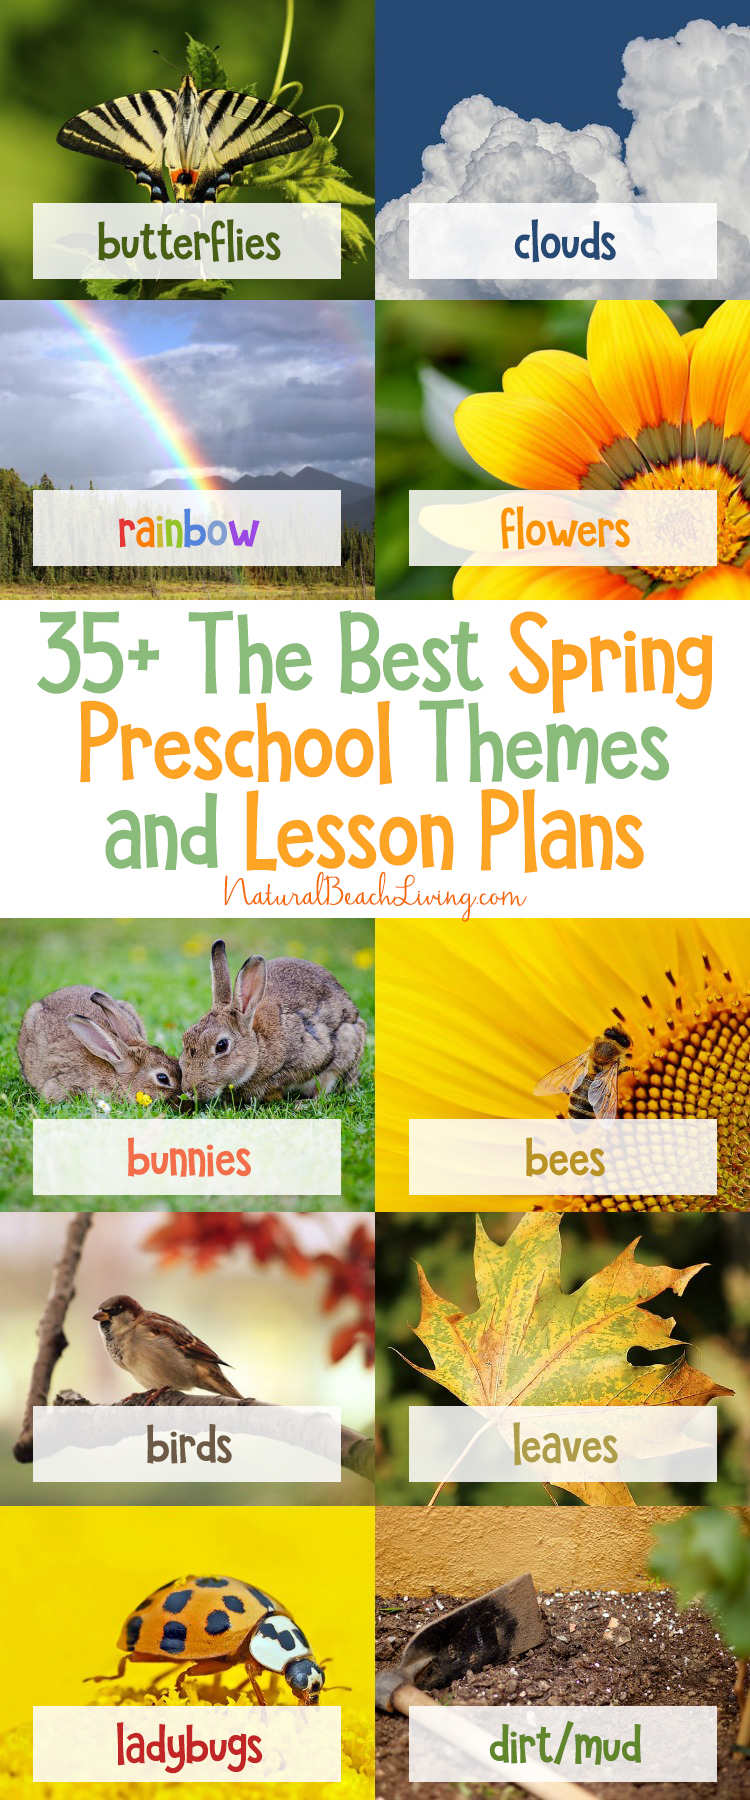 Montessori Themes Preschool Activities for April, April Montessori ideas, Life cycles, Weather Theme Activities, Tray ideas, Earth Day, Spring Activities